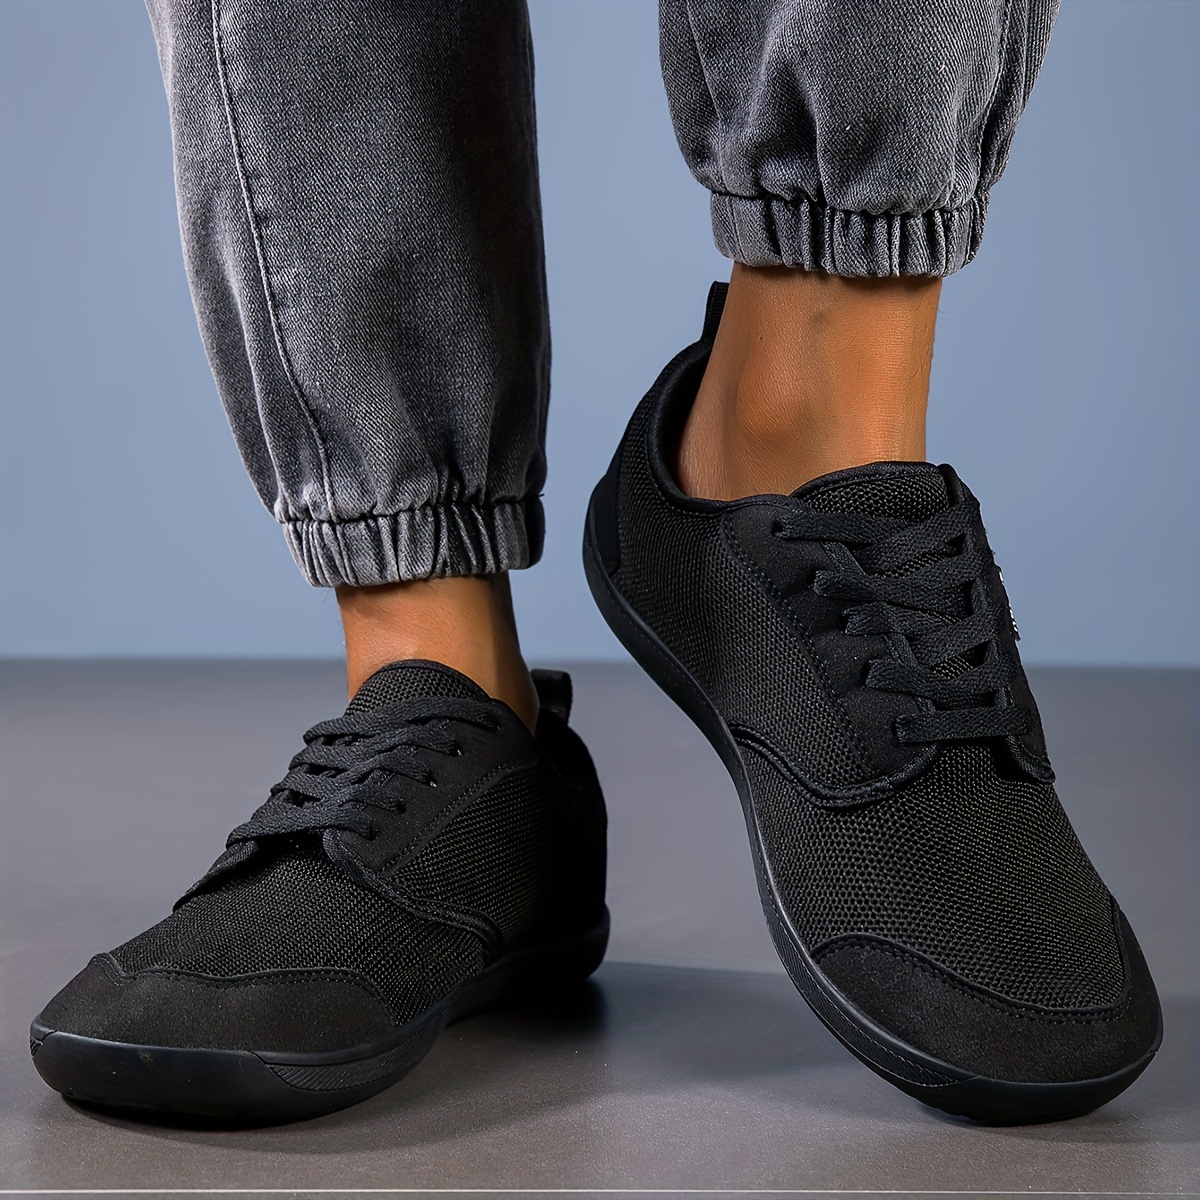 solid versatile sneakers men s minimalist style round toe details 7